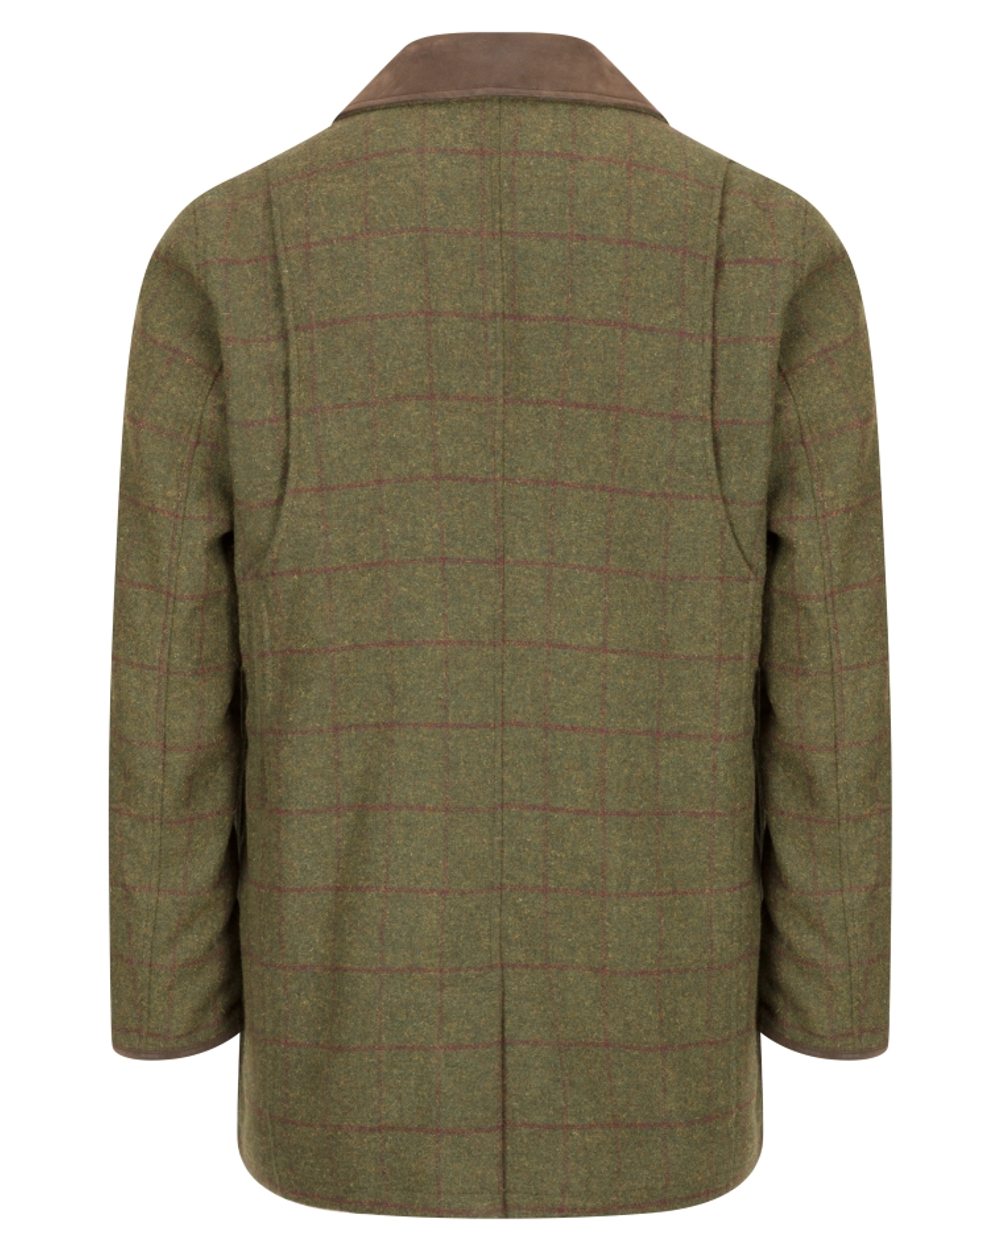 Olive/Wine coloured Hoggs of Fife Tummel Tweed Field Coat on white background